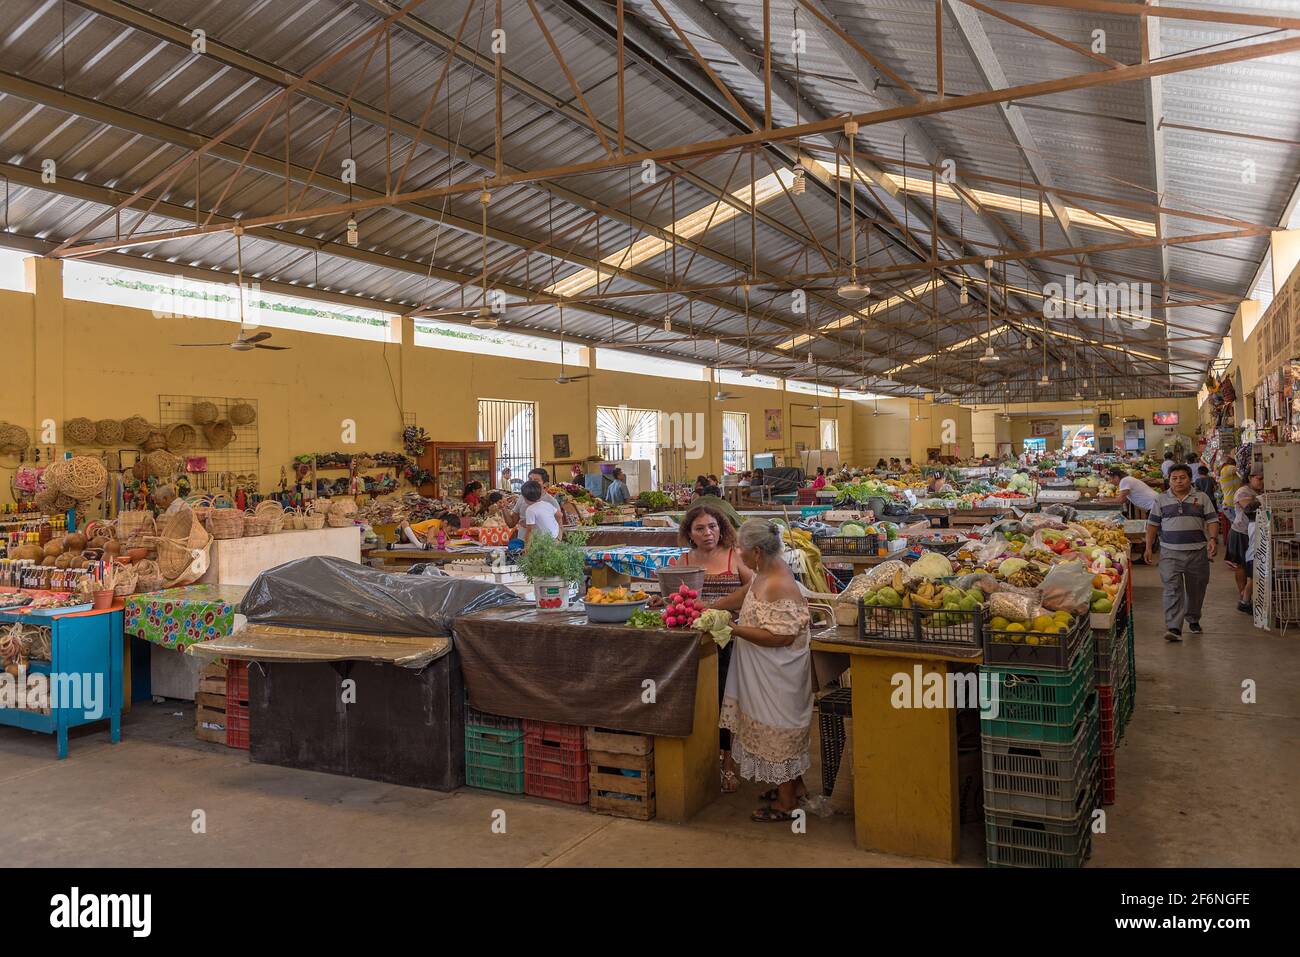 Sales stalls in the main market, Mercado Municipal in Valladolid, Mexico Stock Photo